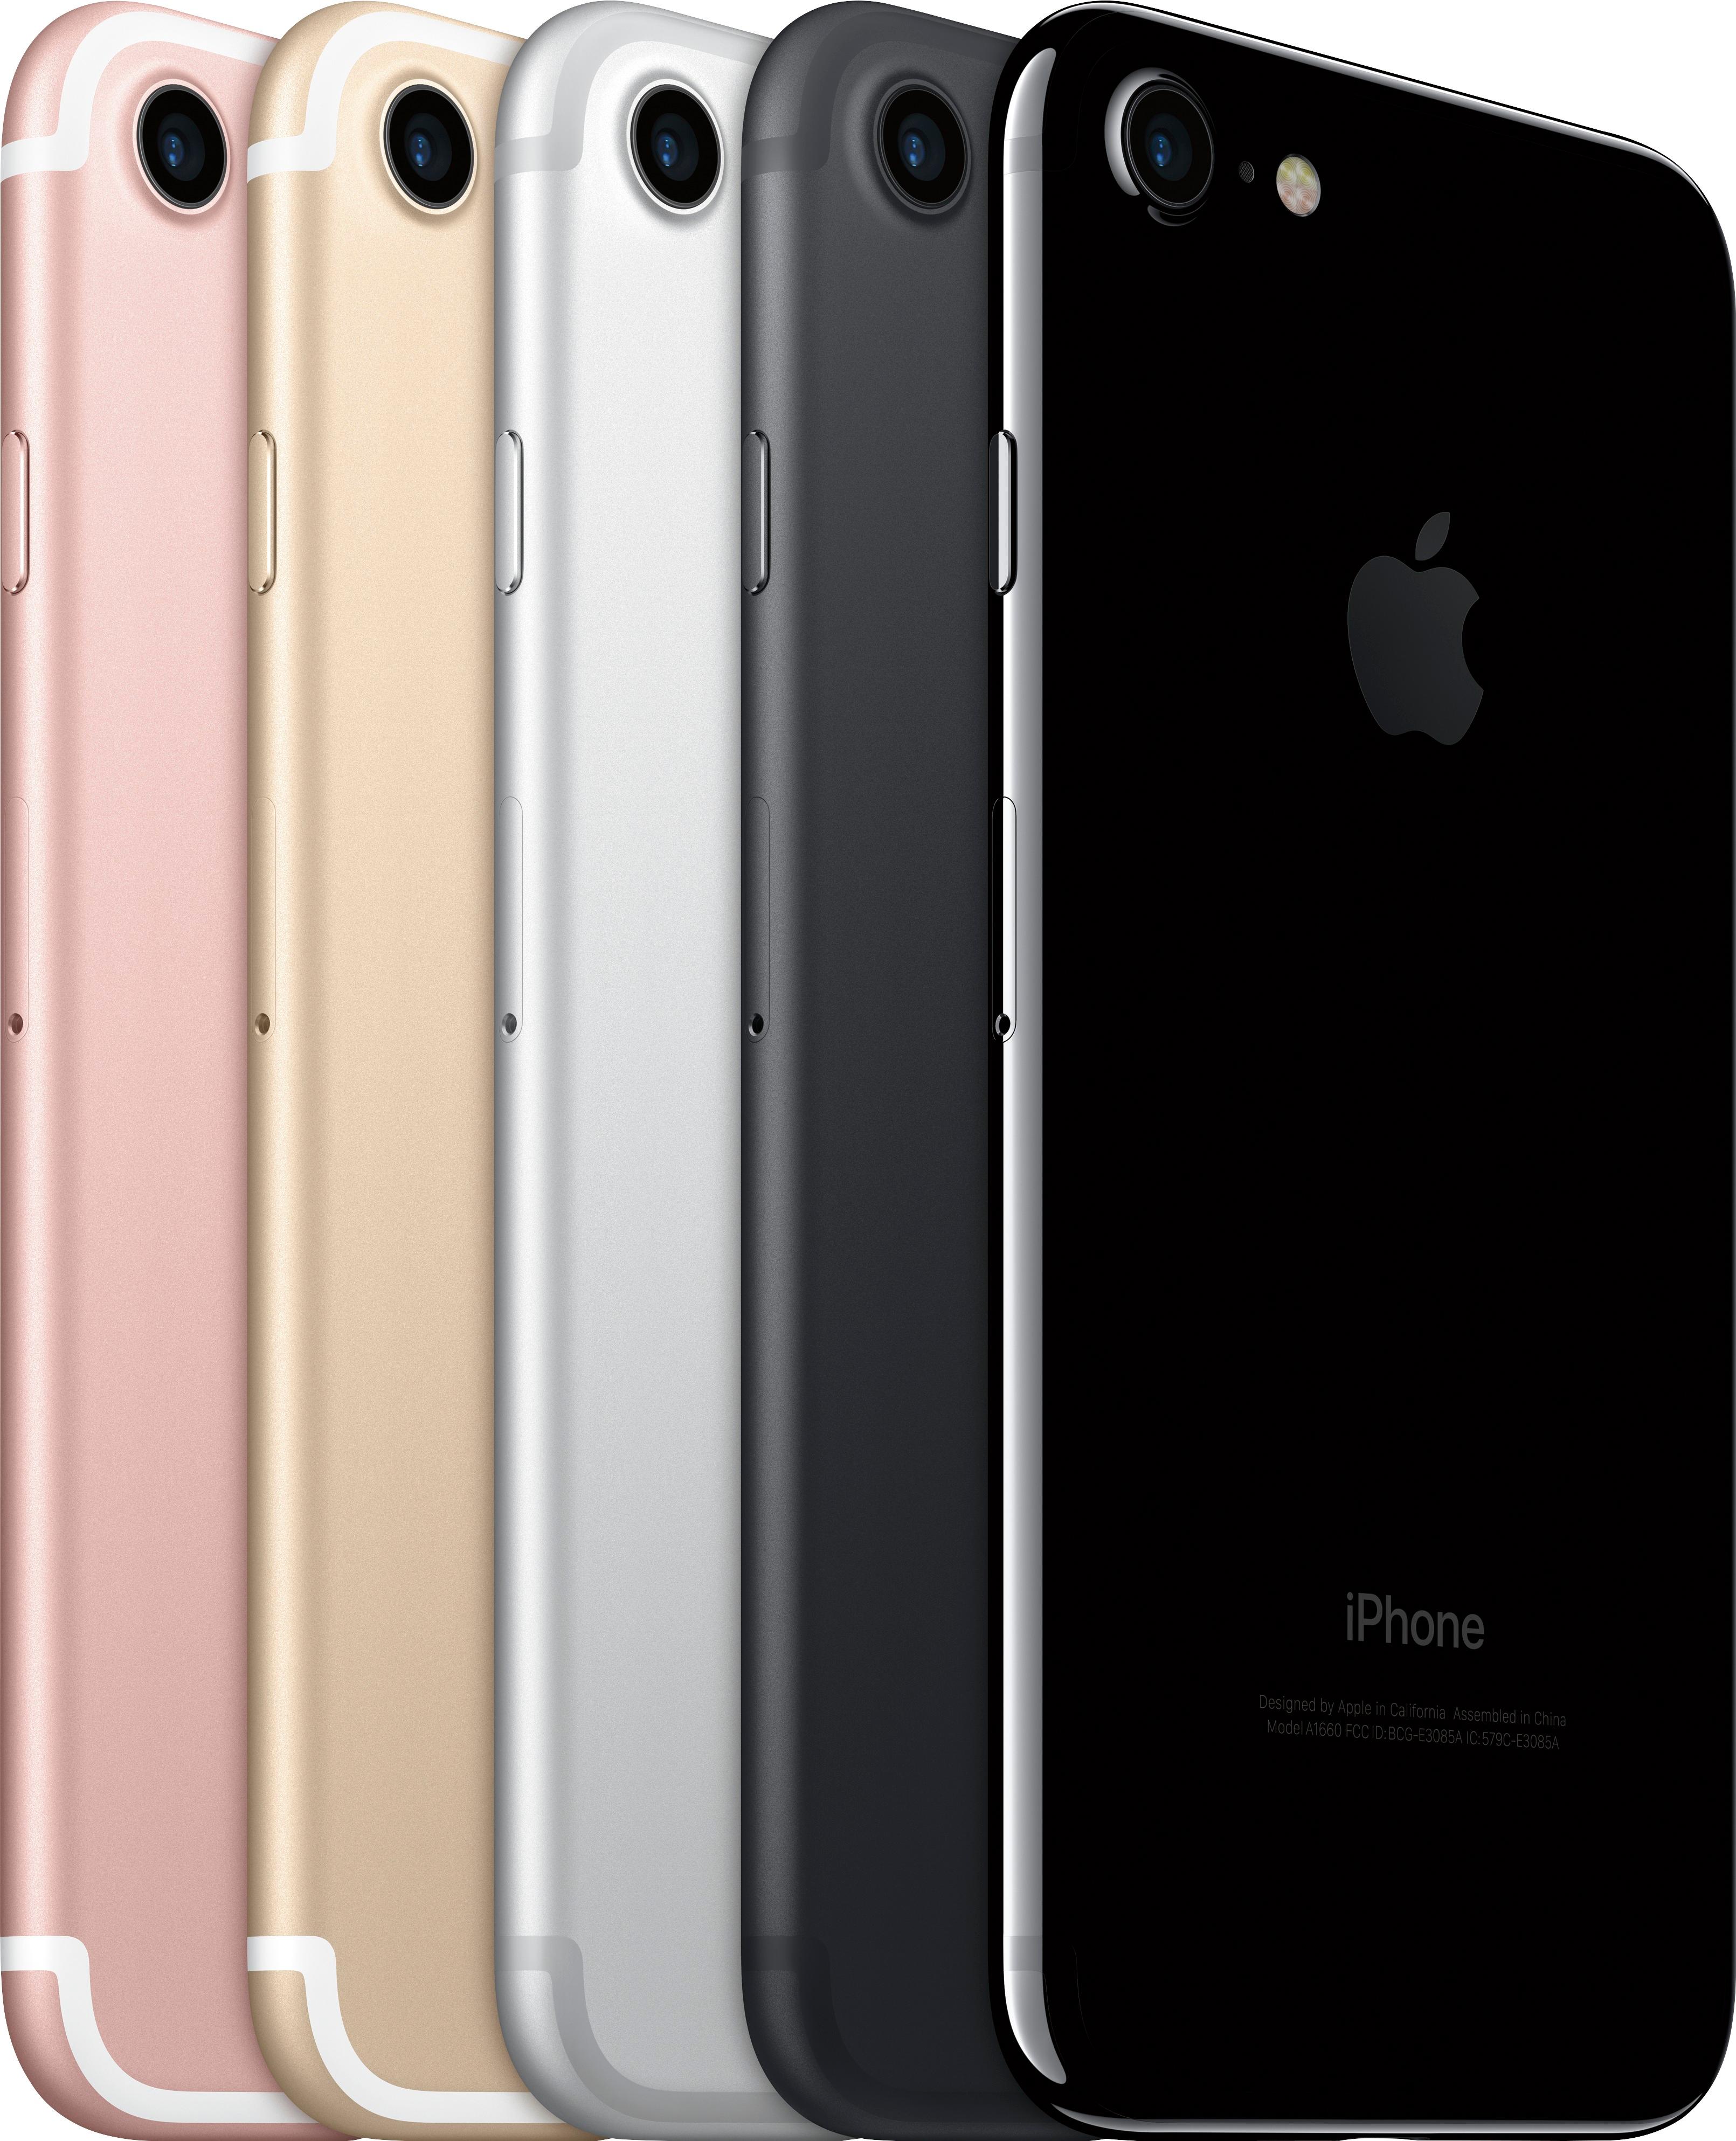 Customer Reviews: Apple iPhone 7 32GB Black (Sprint) MN8G2LL/A - Best Buy